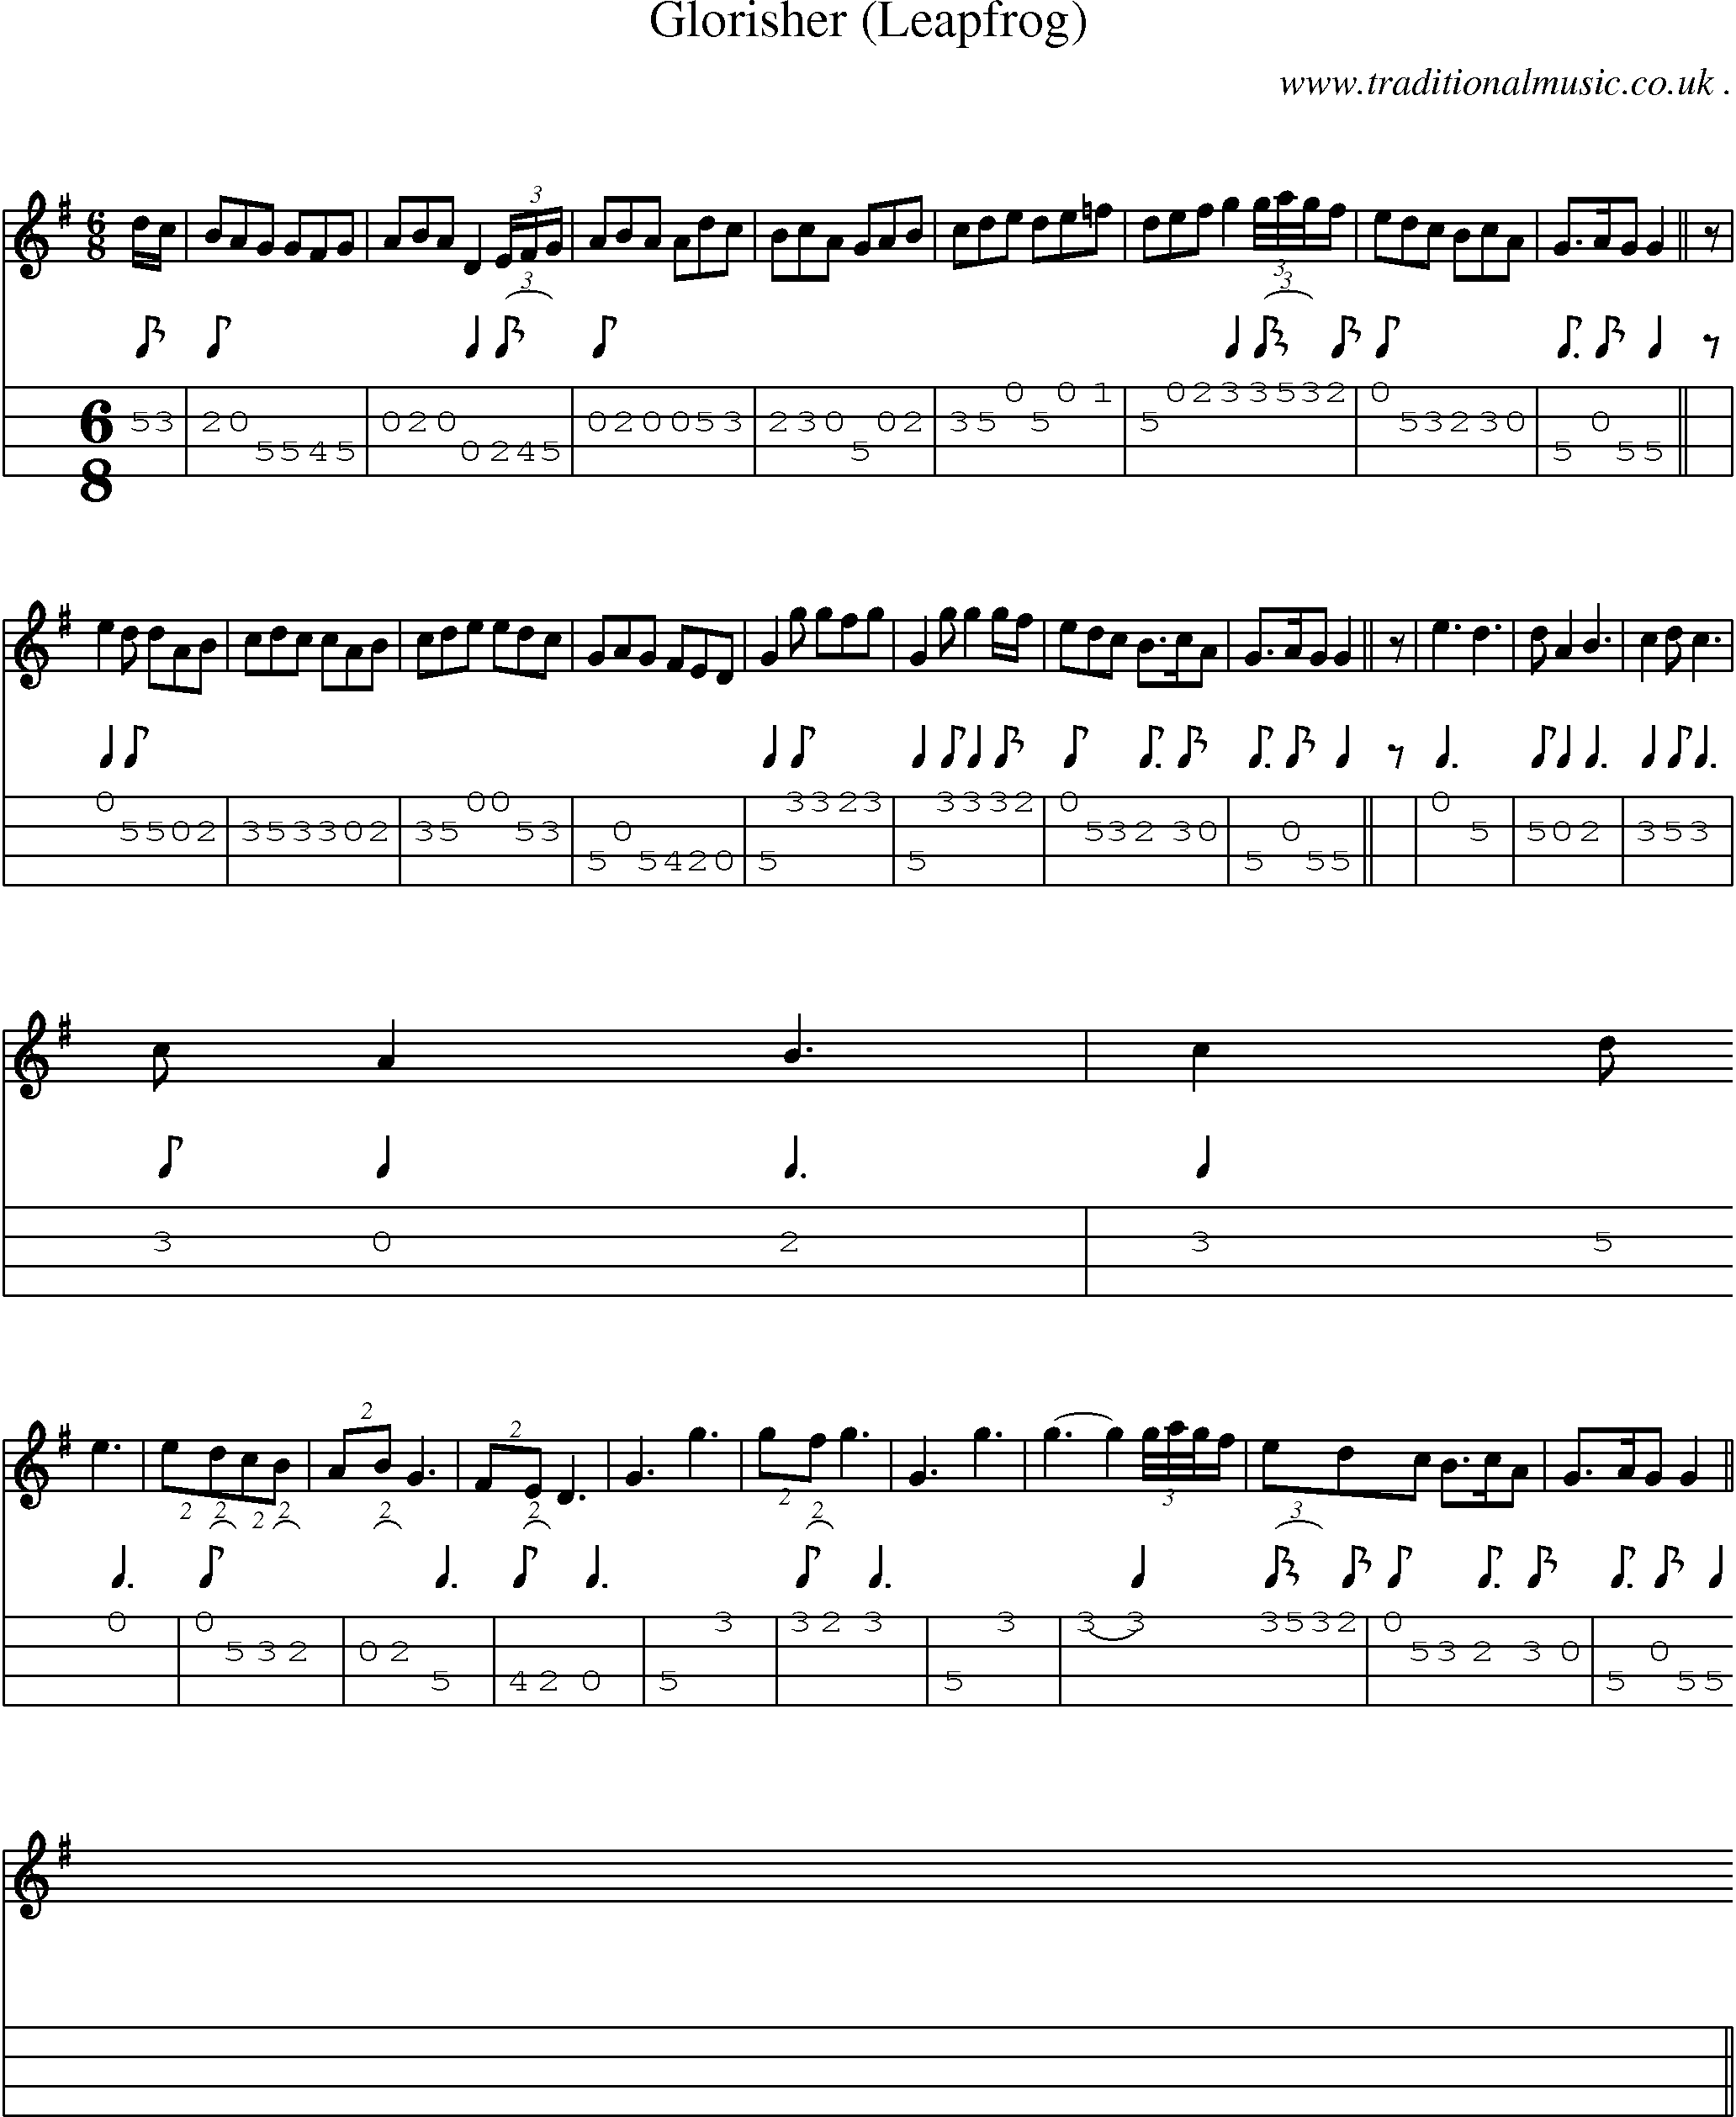 Sheet-Music and Mandolin Tabs for Glorisher (leapfrog)